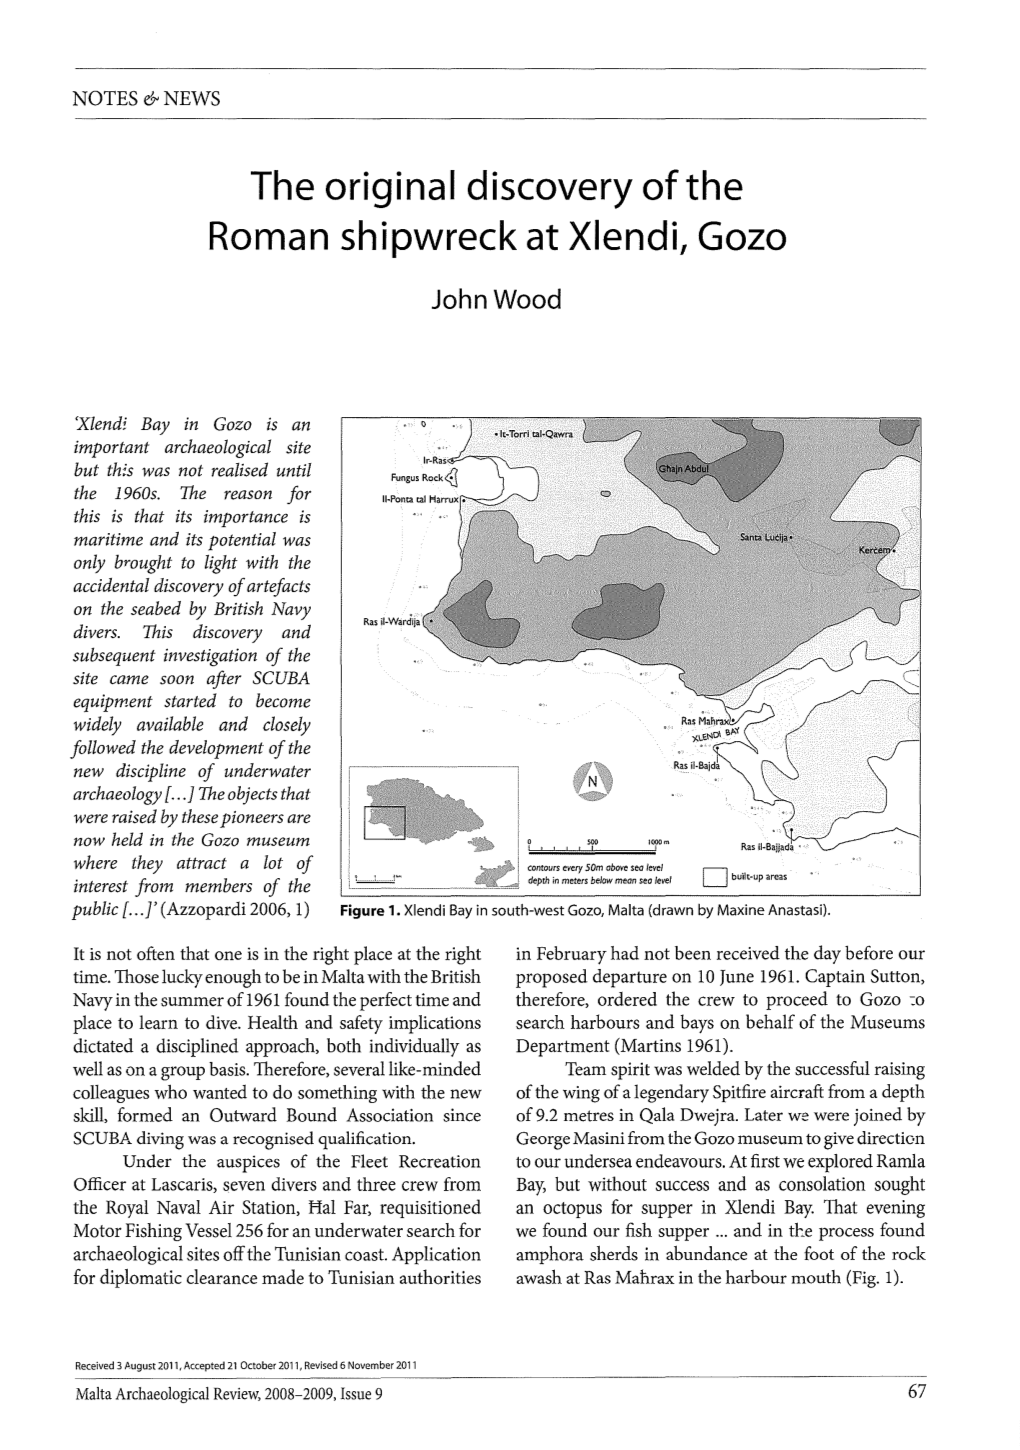 The Original Discovery of the Roman Shipwreck at Xlendi, Gozo